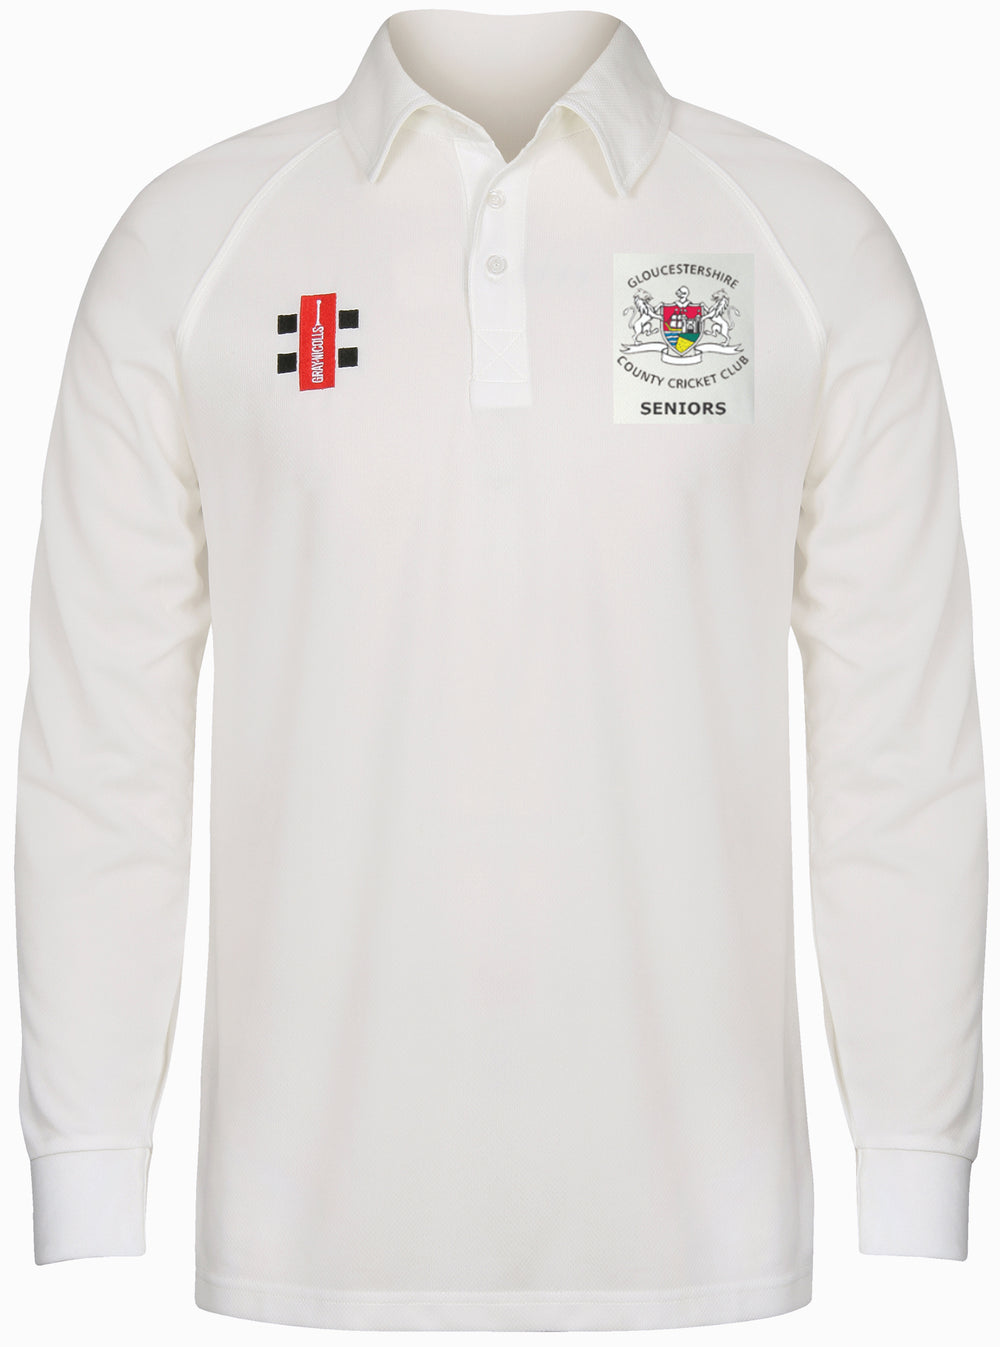 Gloucestershire CCC Seniors Long Sleeve Matrix Shirt